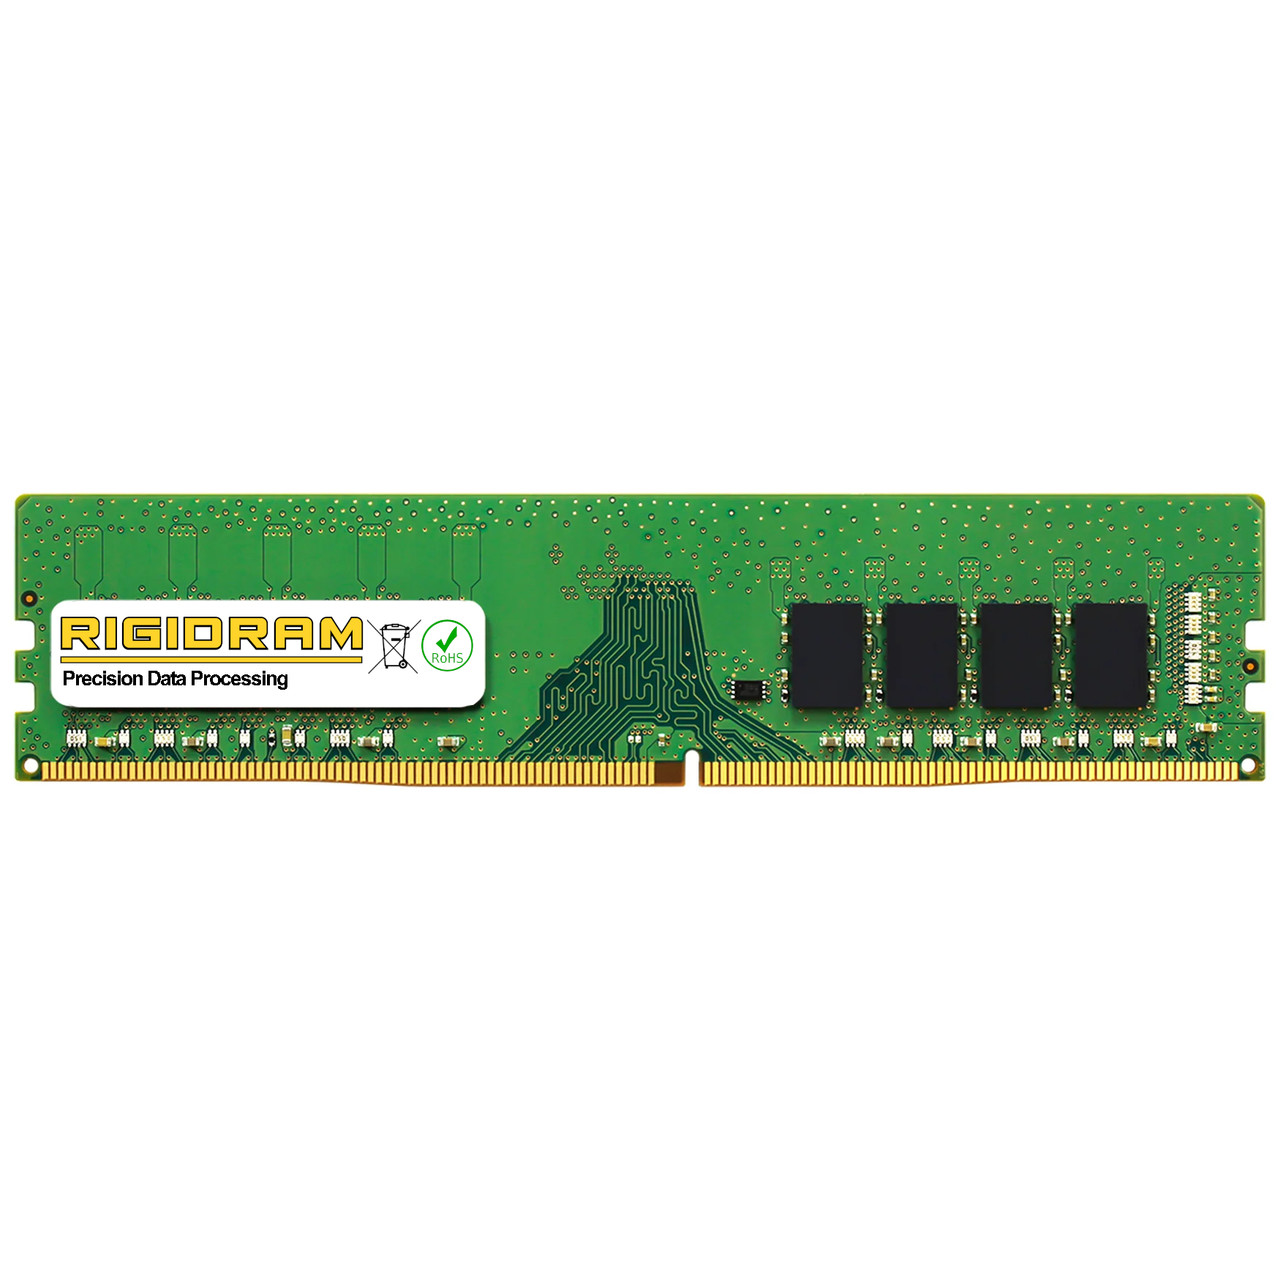 16GB RAM HP Desktop Pro A G2 DDR4 Memory by RigidRAM Upgrades